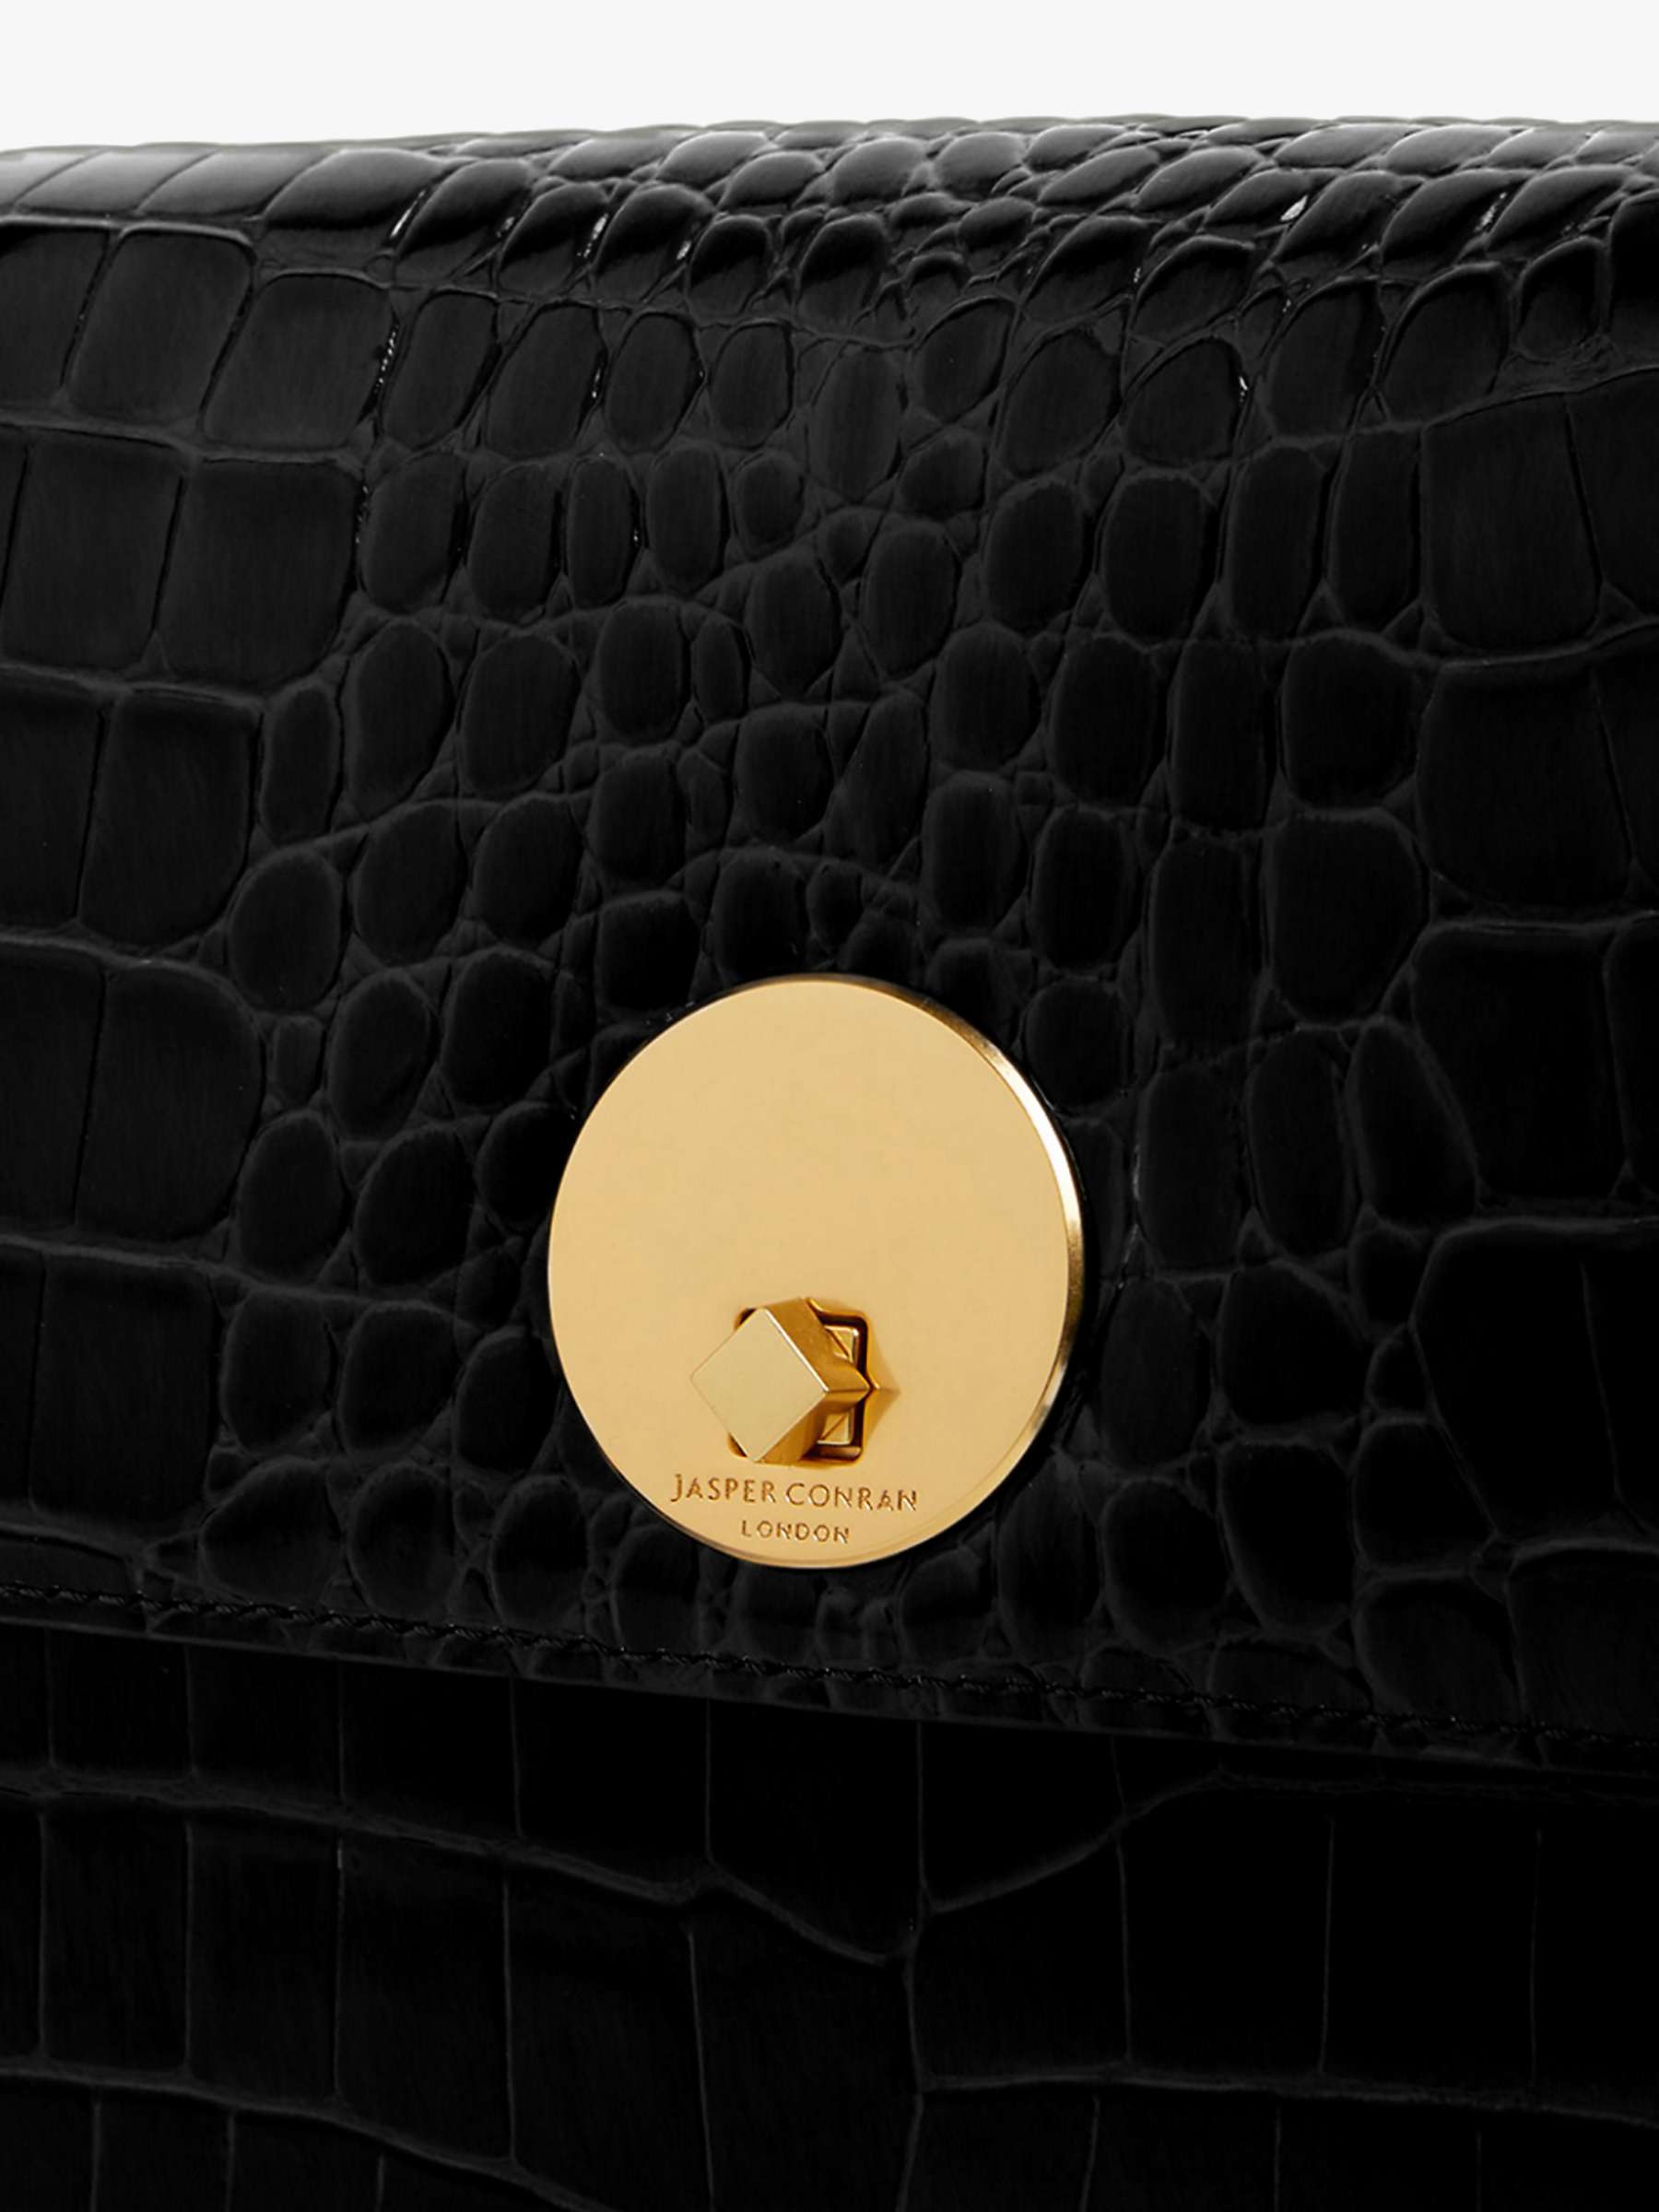 Buy Jasper Conran London Alexis Croc Leather Cross Body Bag Online at johnlewis.com